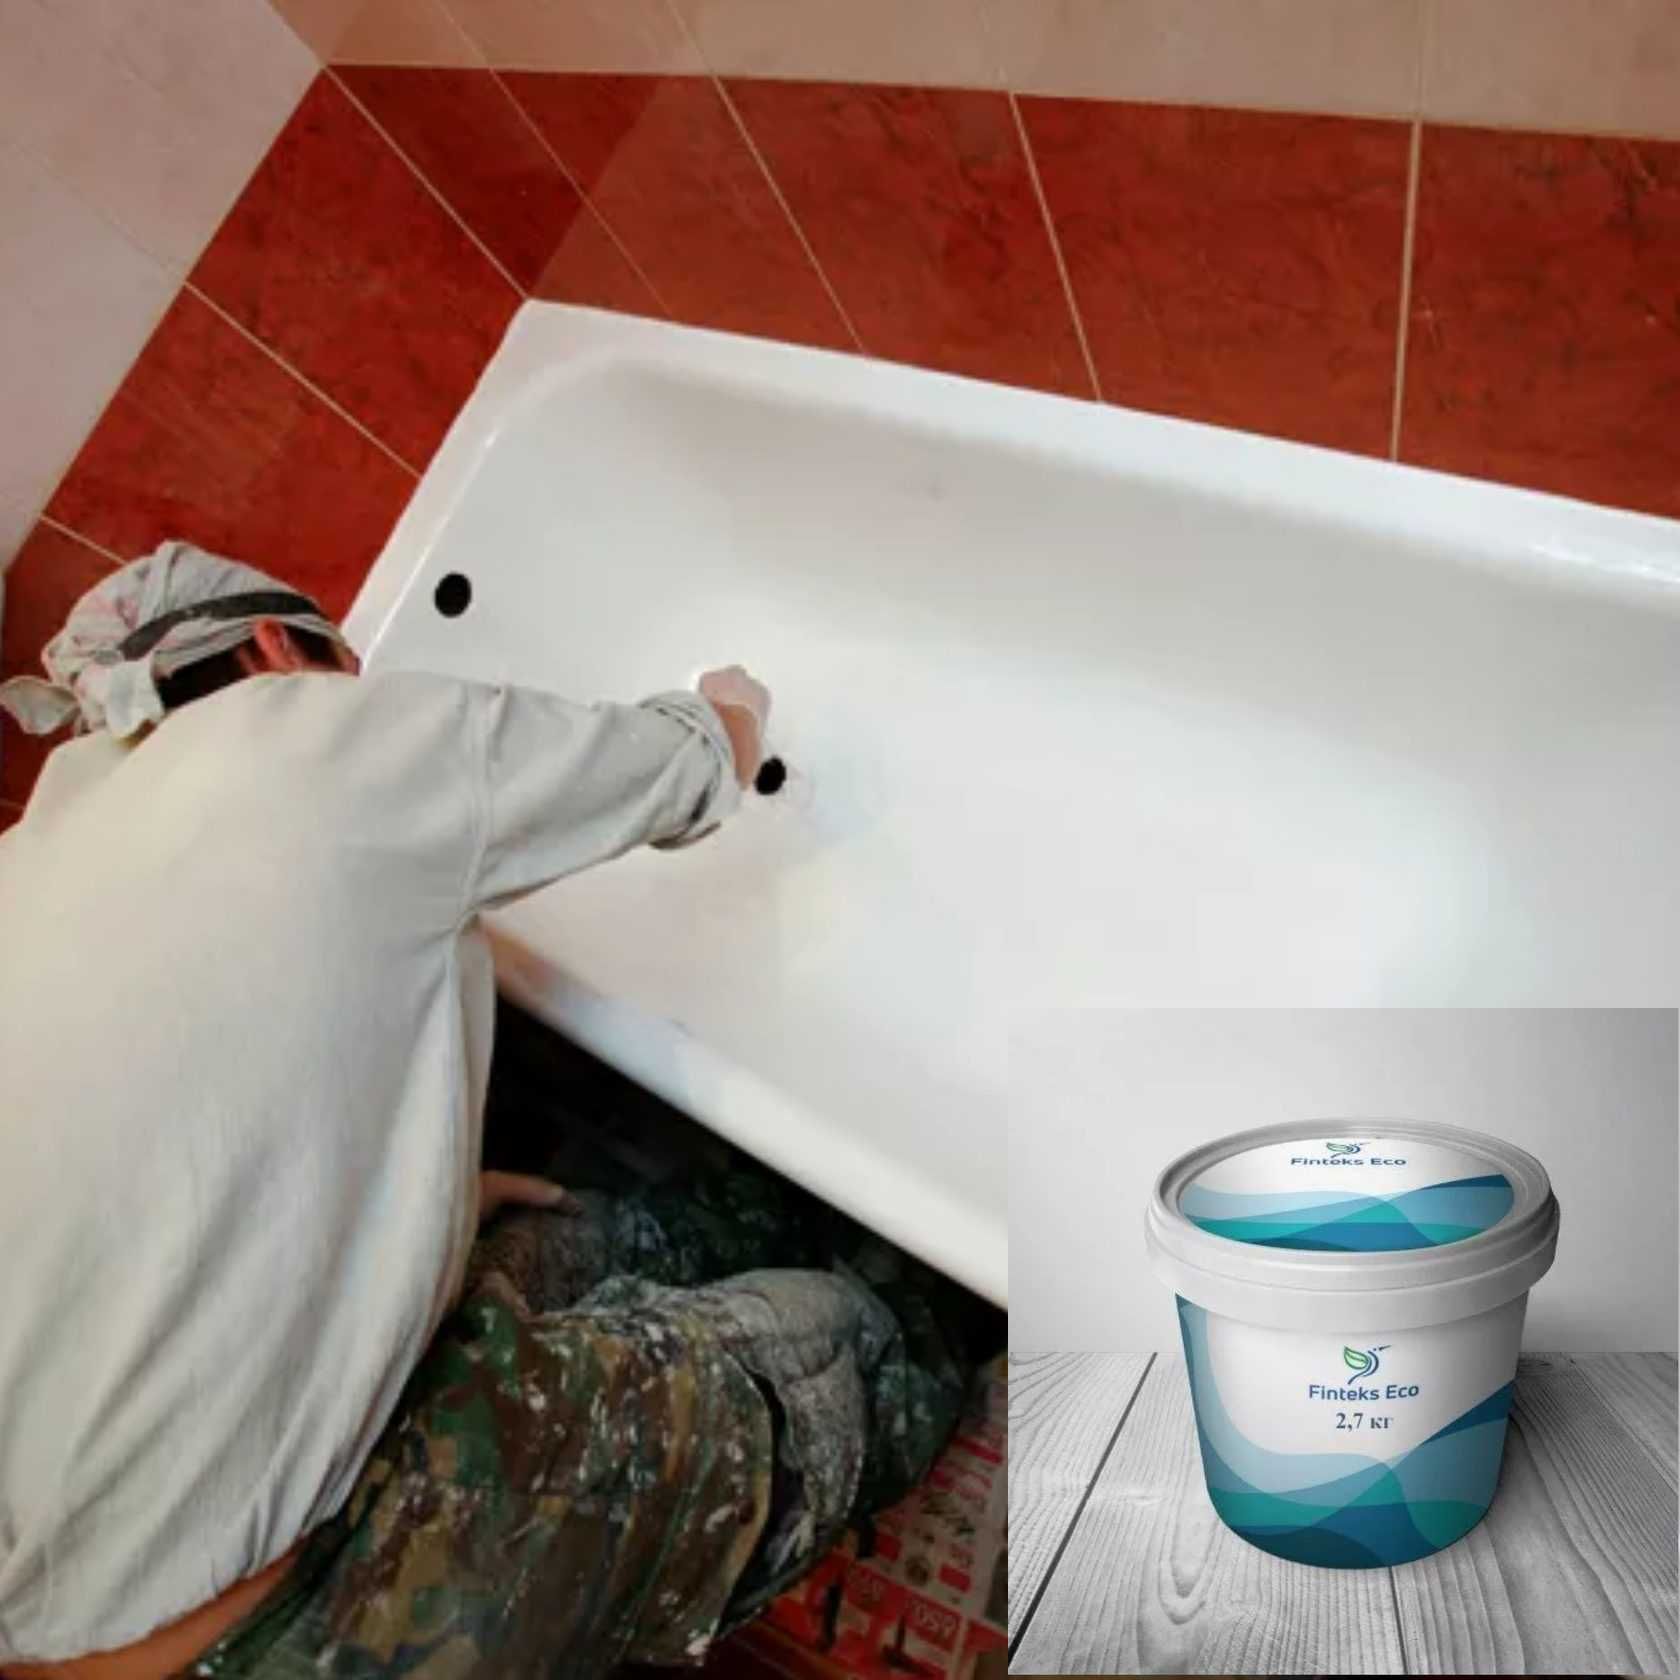 Реставрация ванн, отличного качество в темиртау и караганде